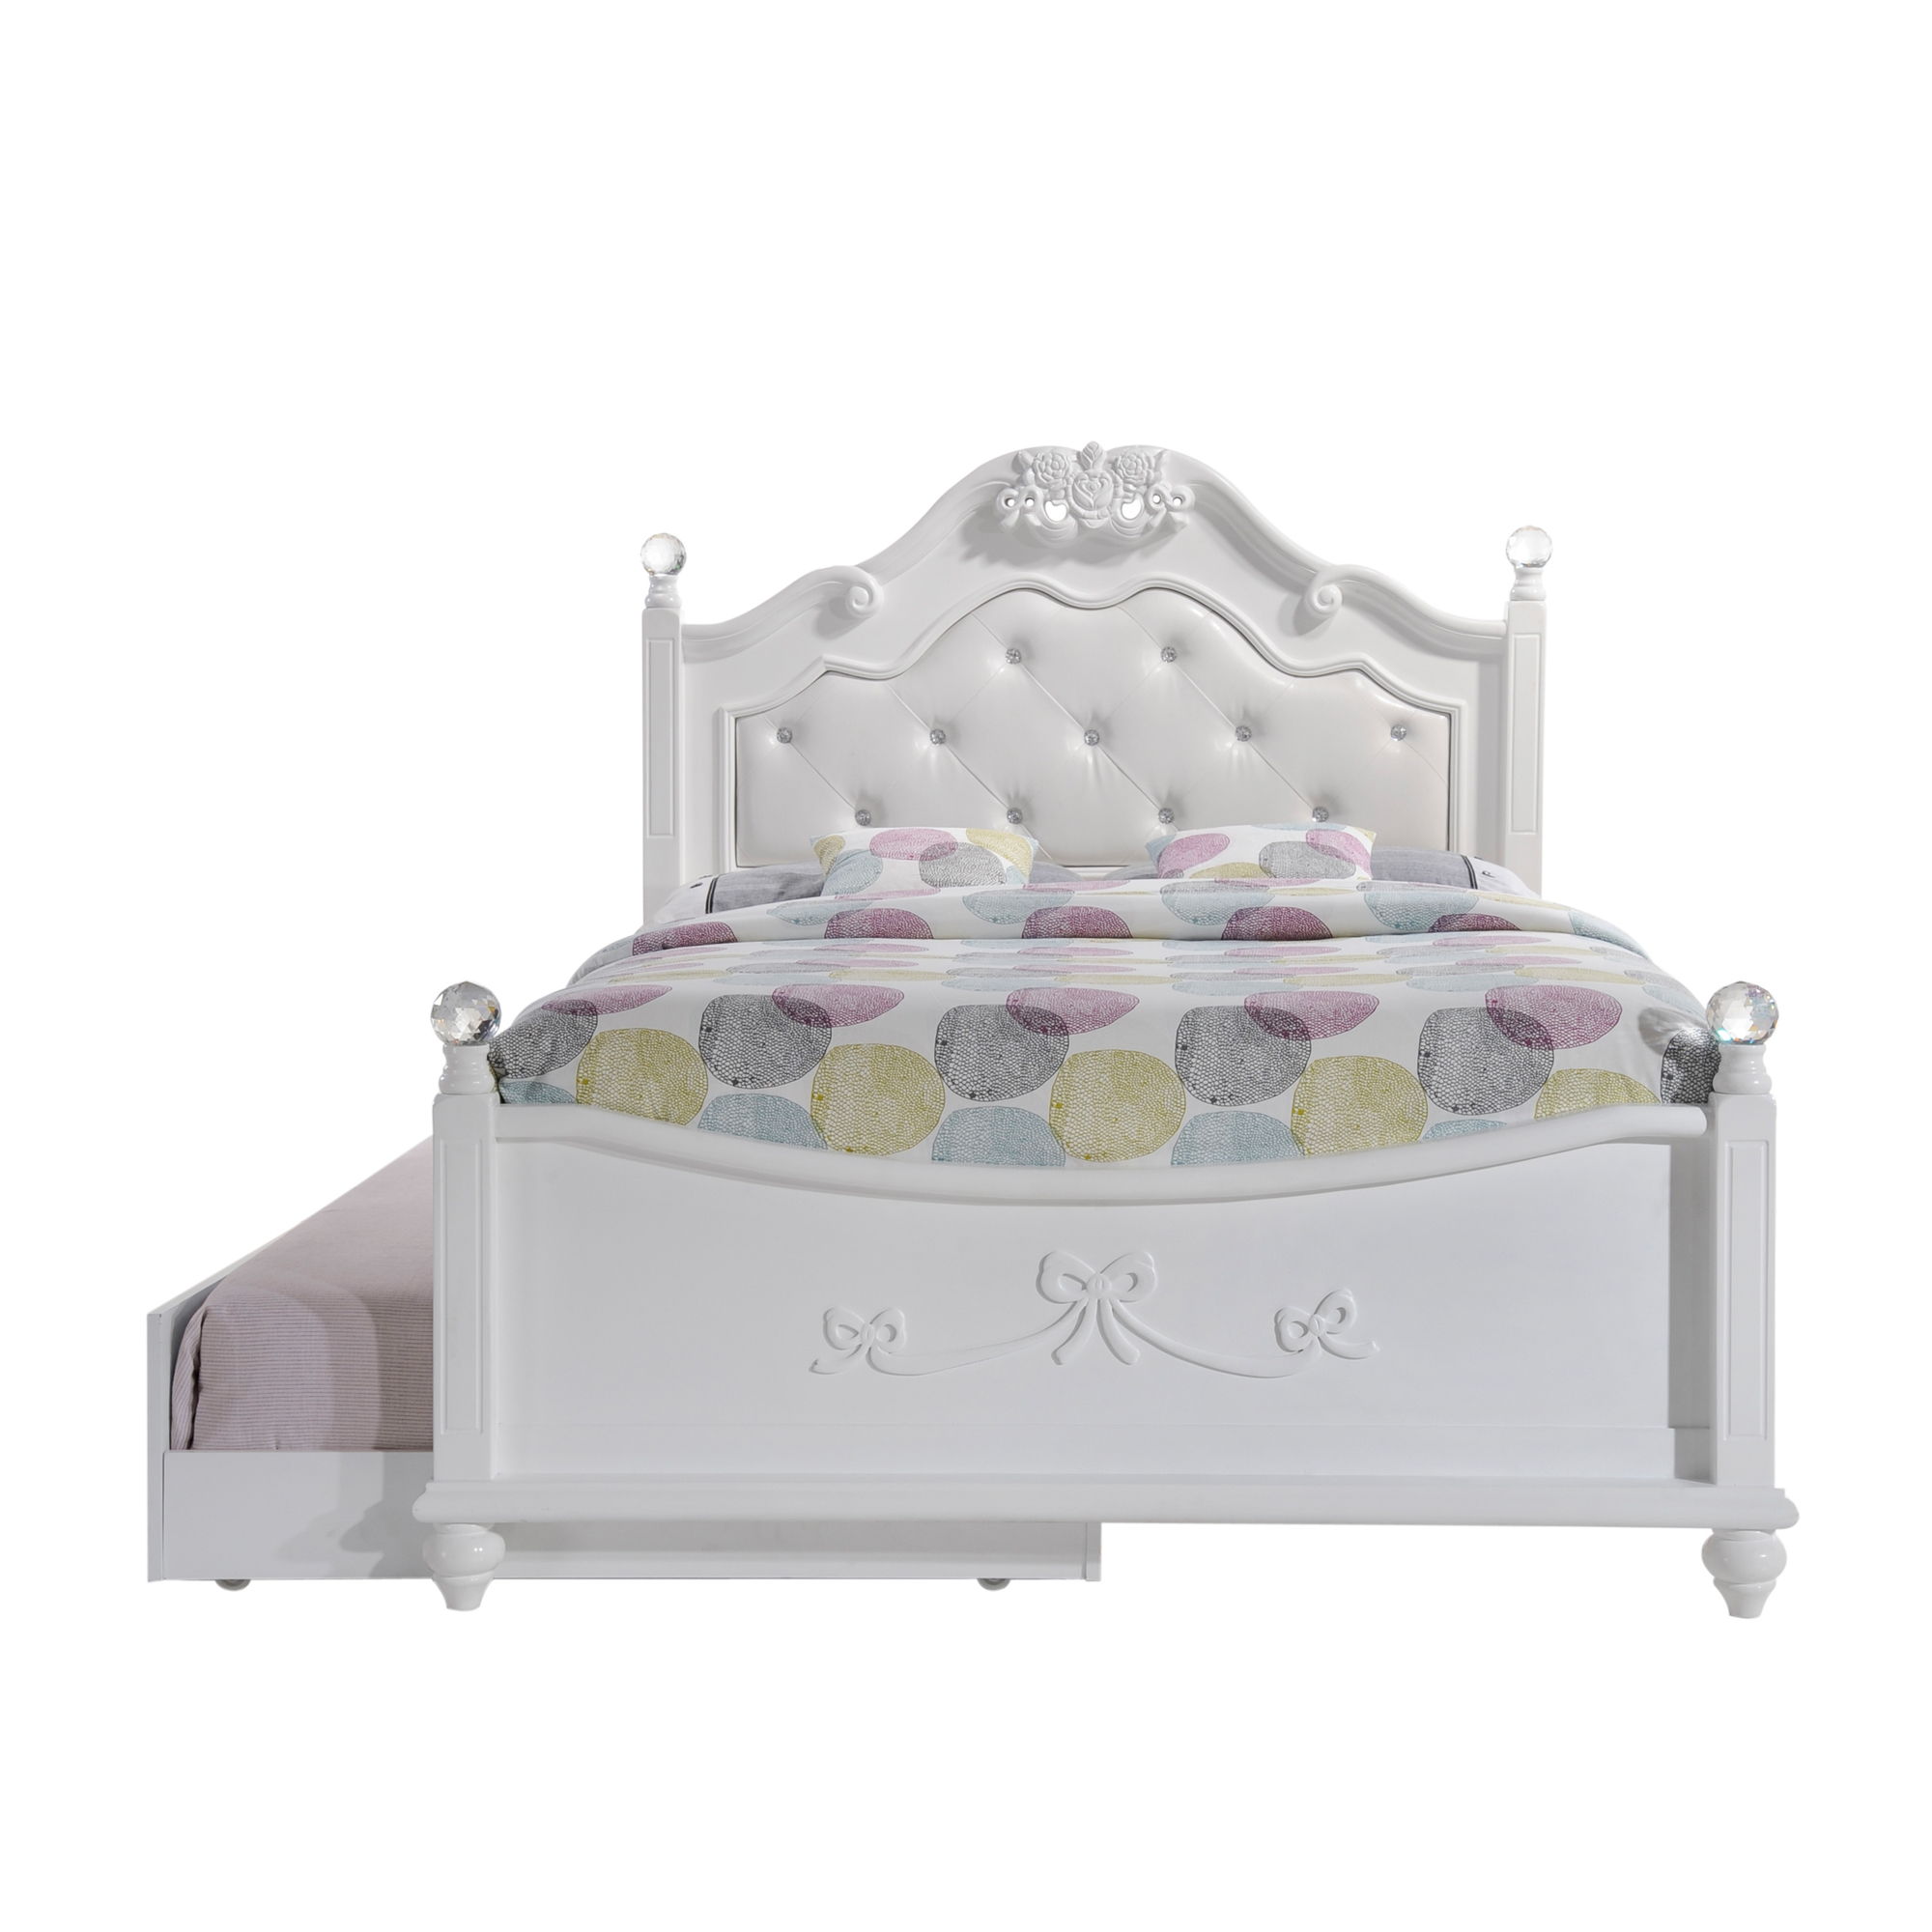 Alana - Full Platform Bed With Storage Trundle - White